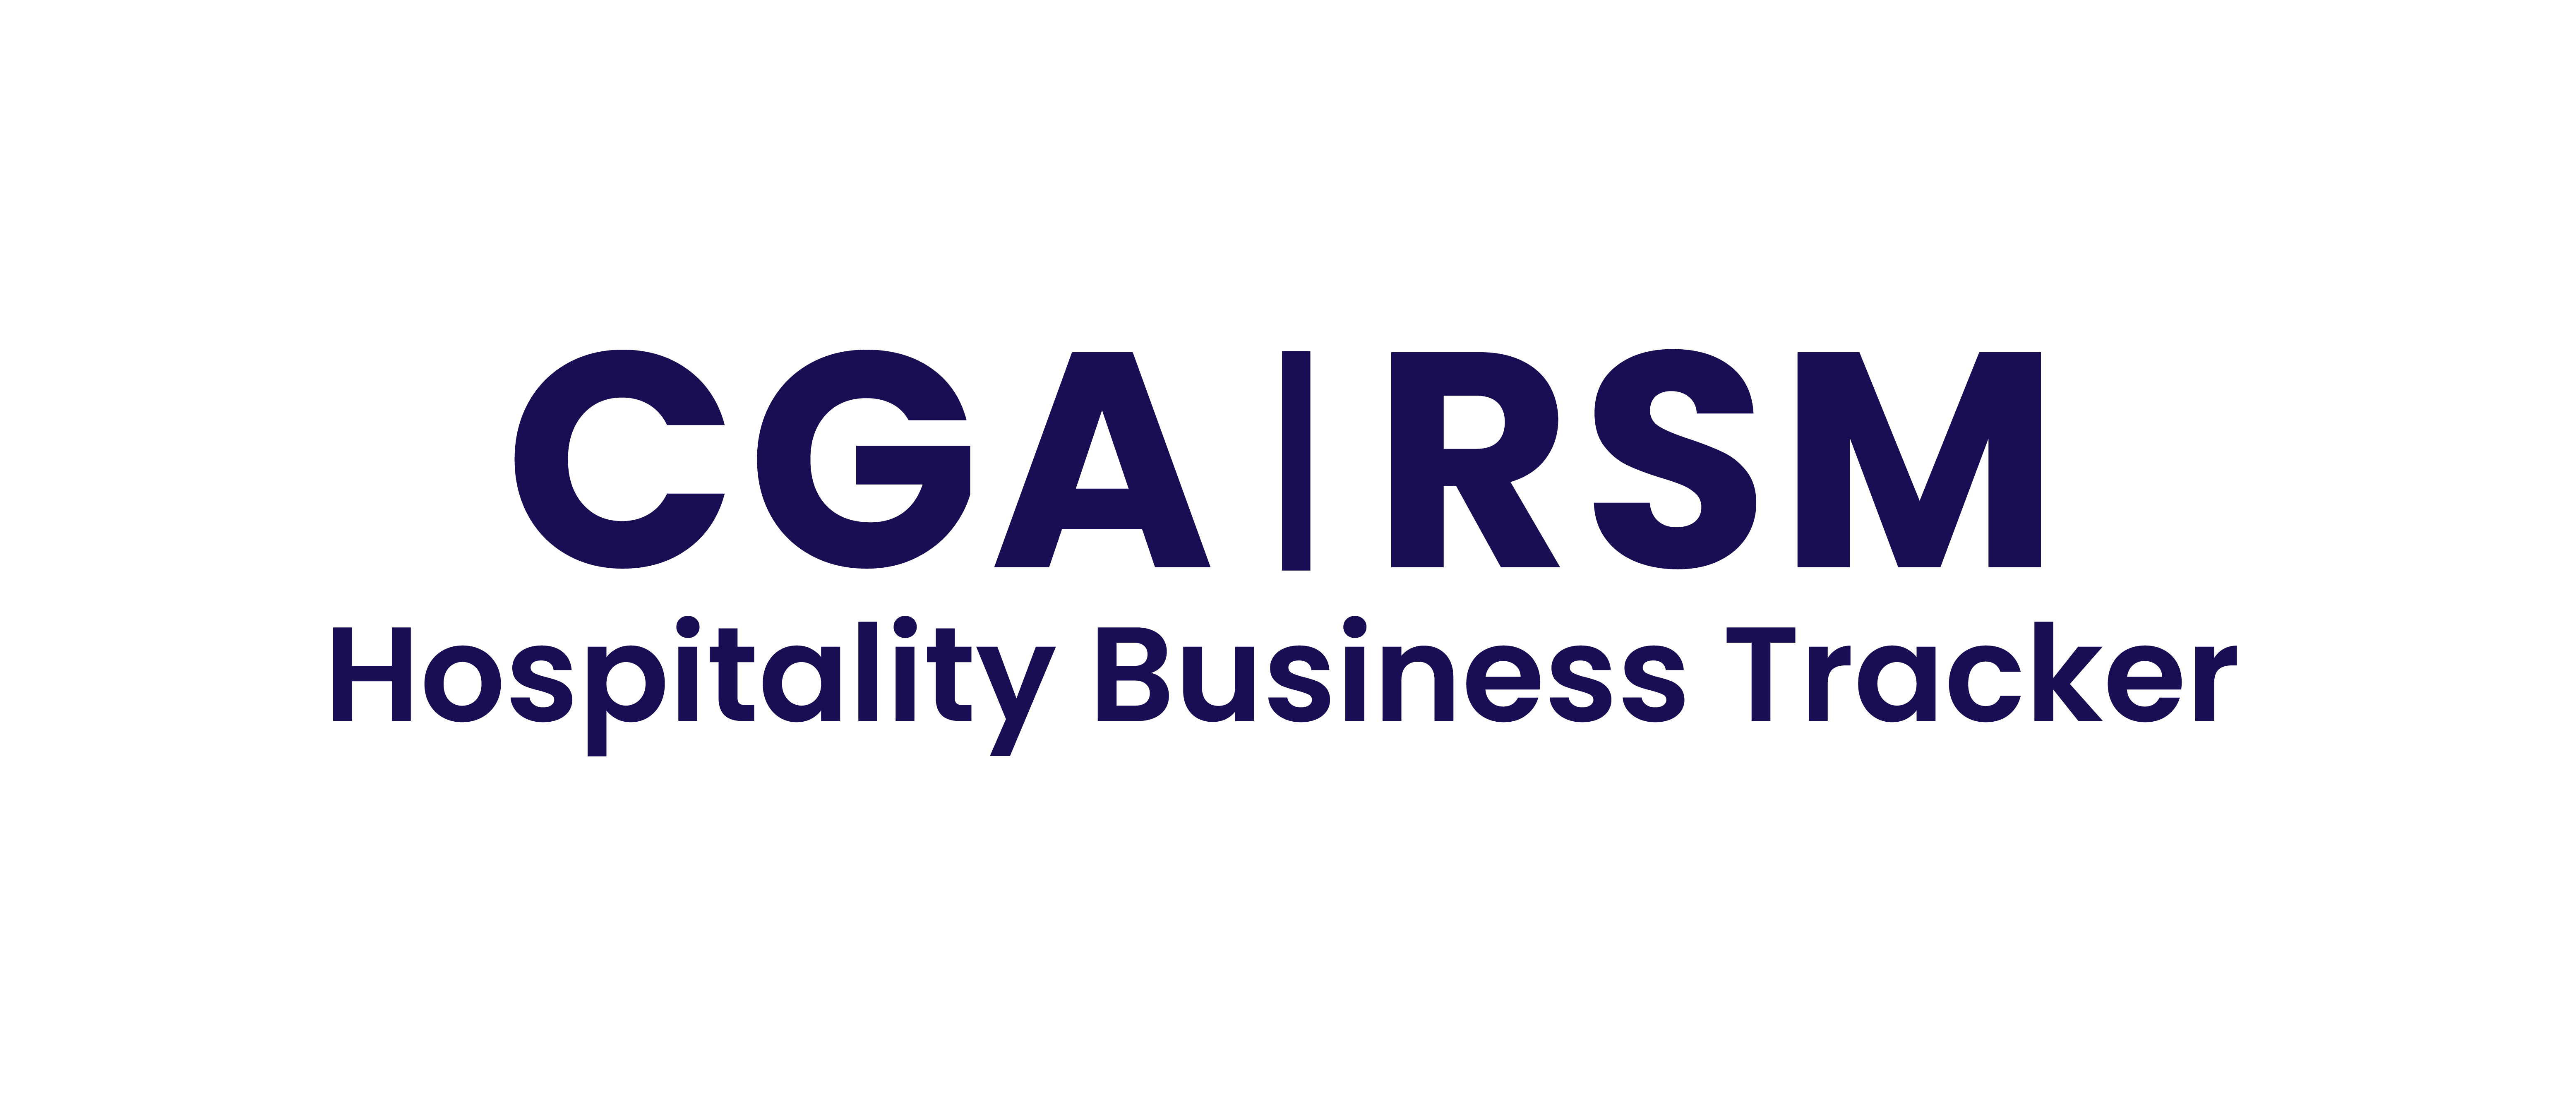 CGA_RSM Hospitality Business Tracker (Blue)